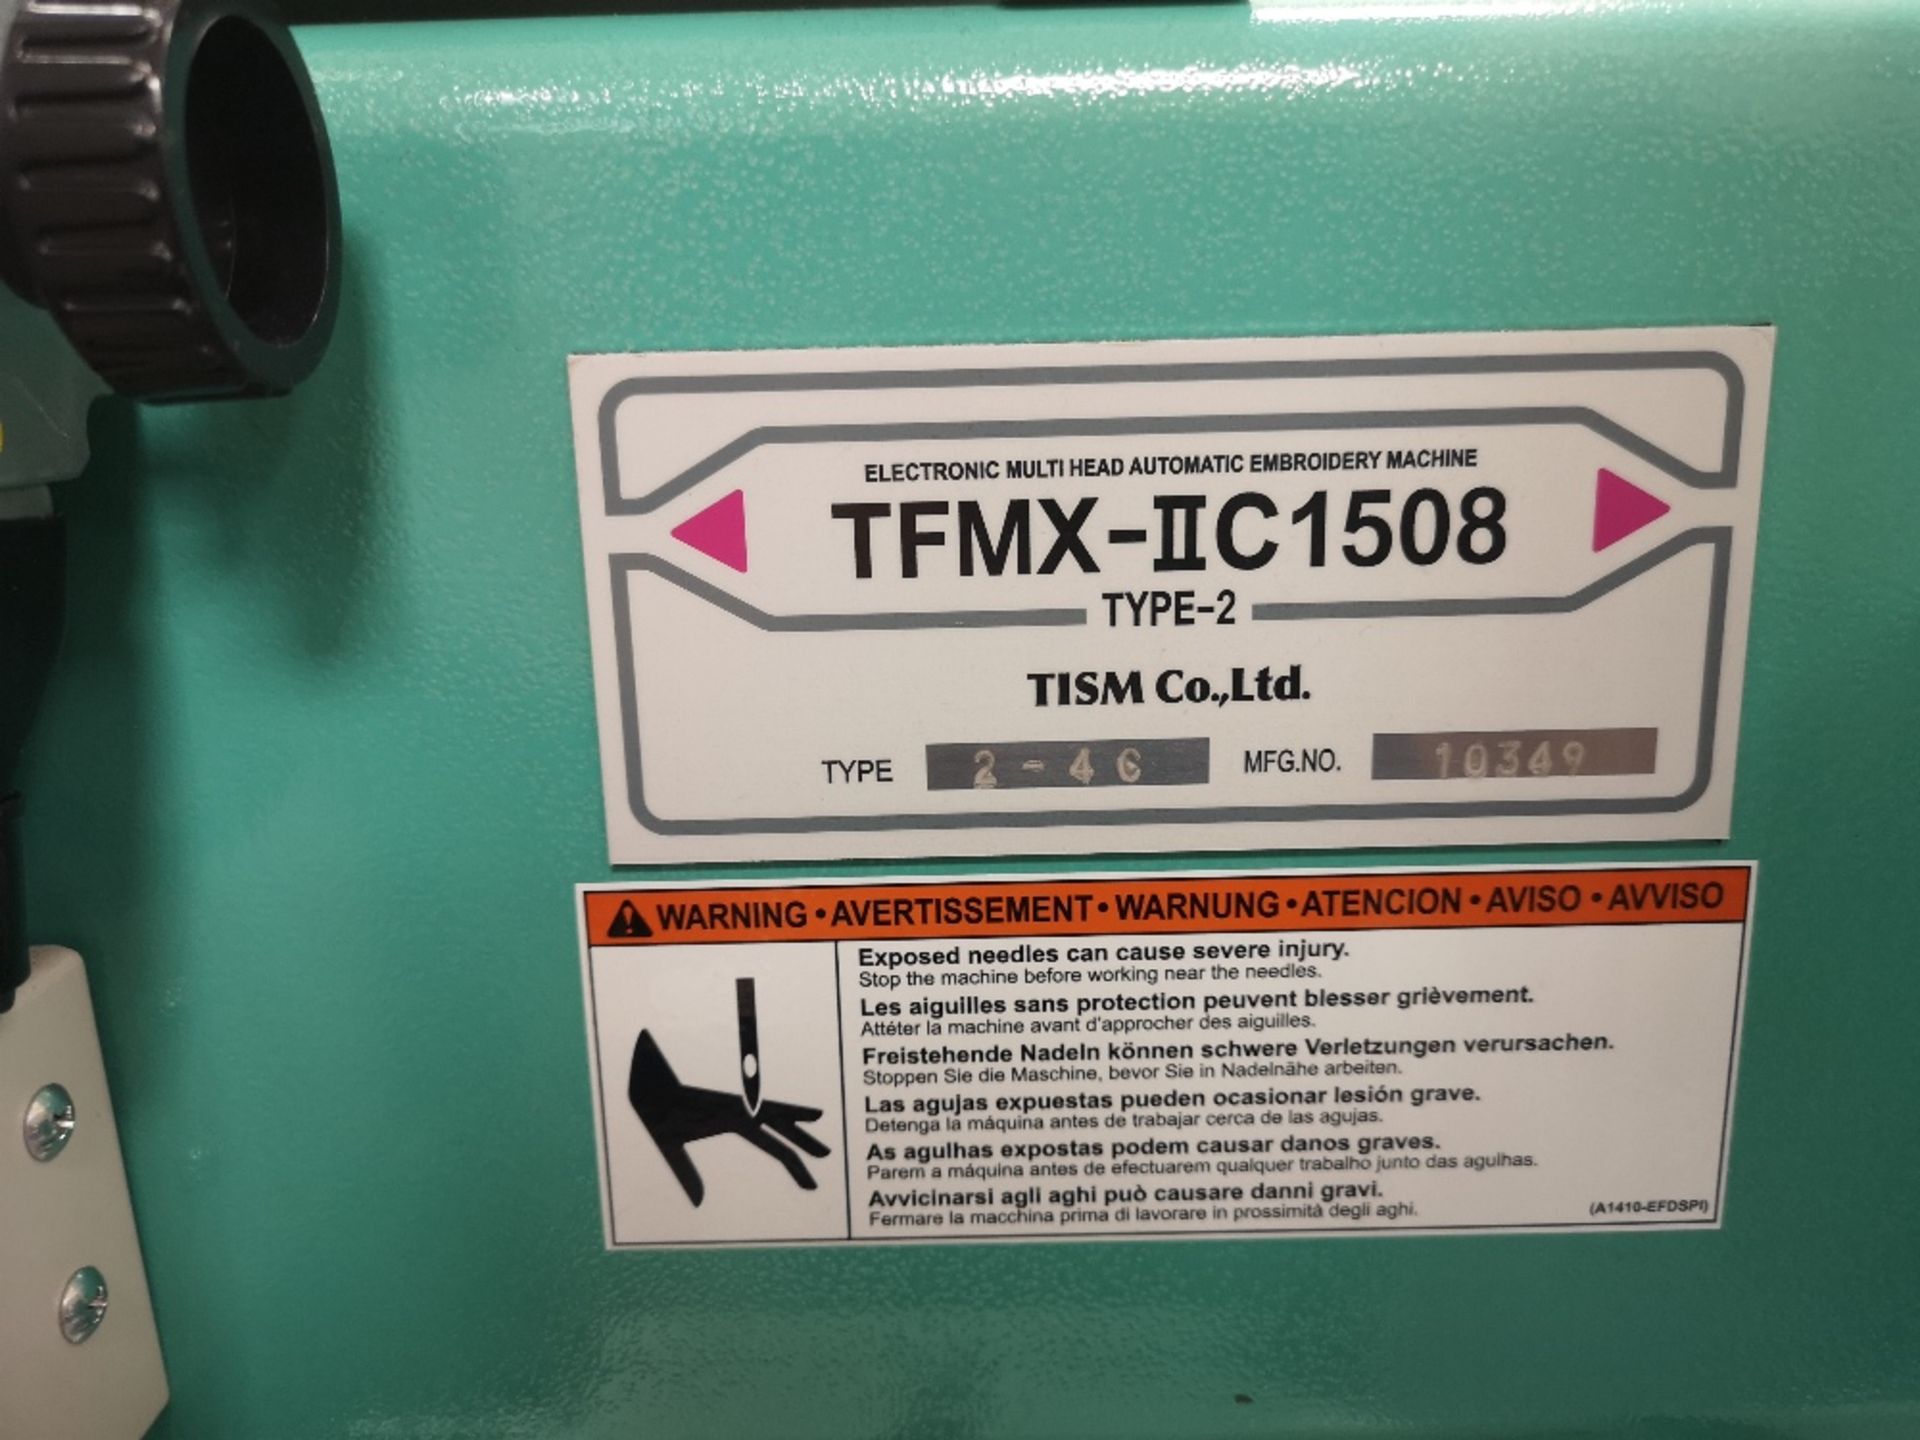 Tajima TFMX-II C1508 Electronic Multi Head Automatic Embroidery Machine (2019) - Image 6 of 8